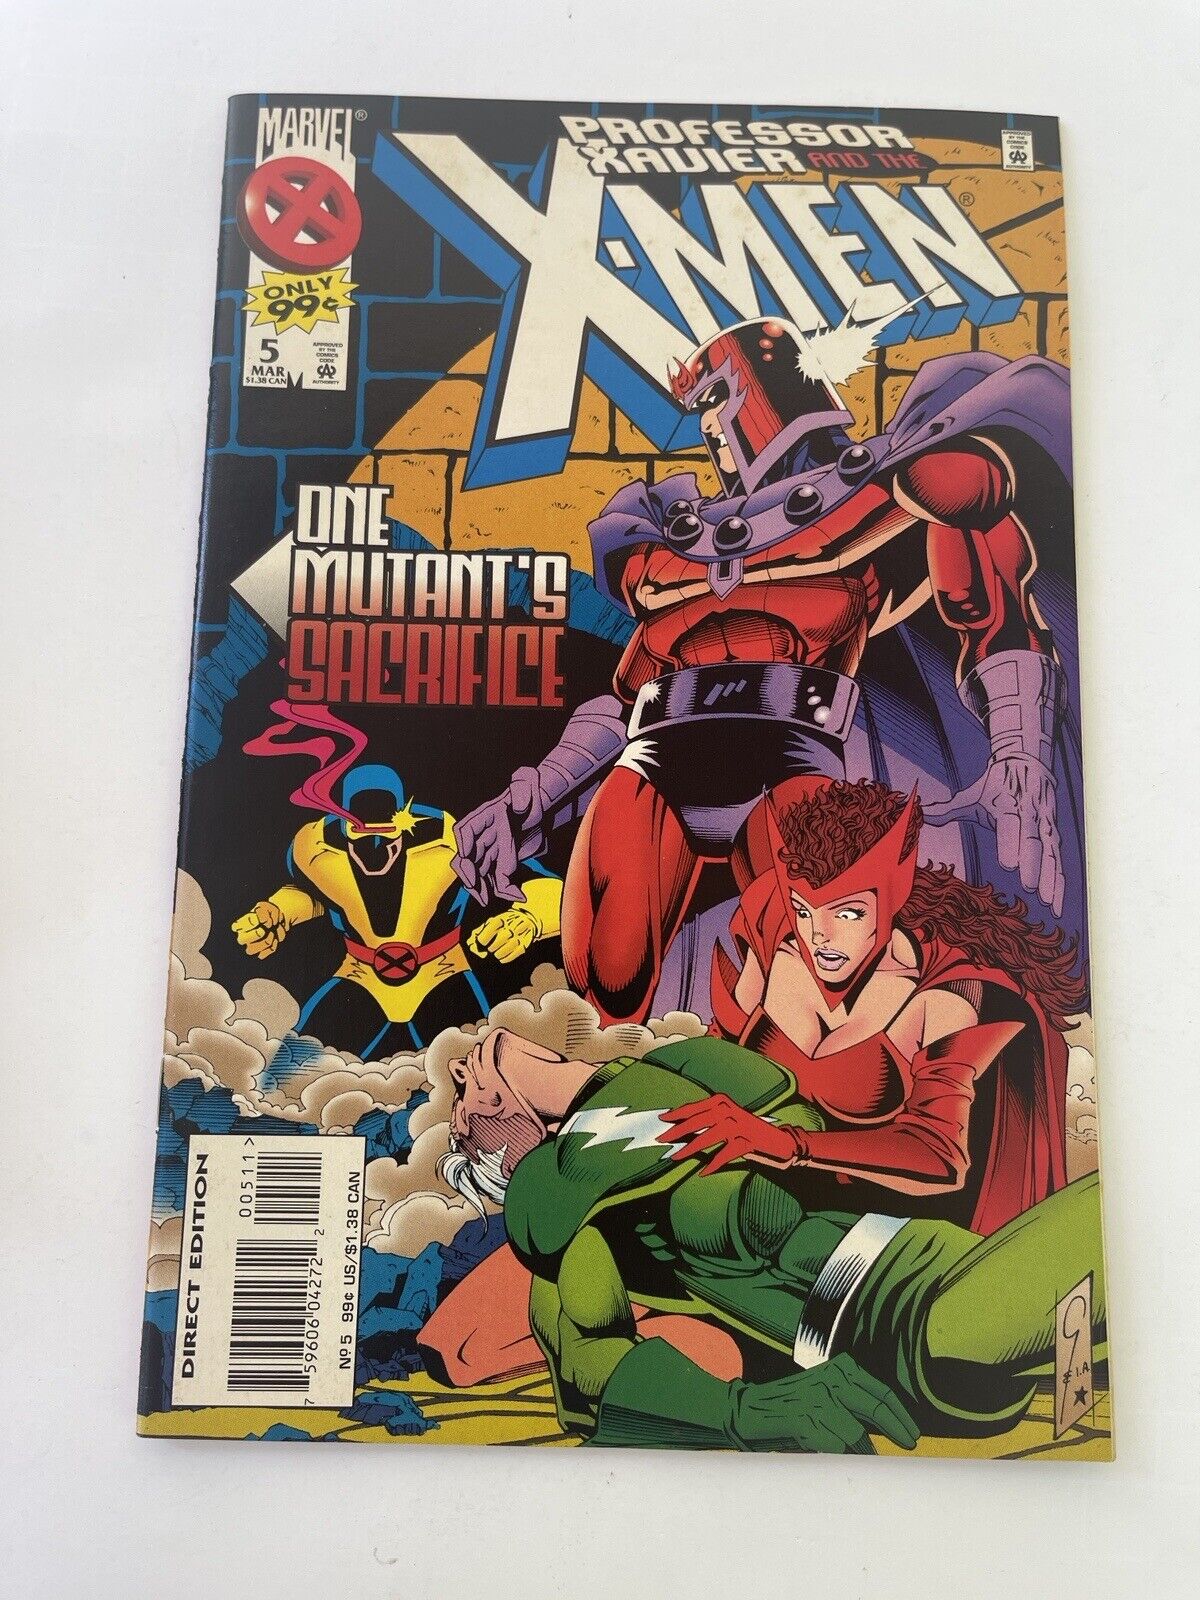 Marvel Comics Professor Xavier and the X-Men One Mutant\'s Sacrifice Vol 1 No 5 